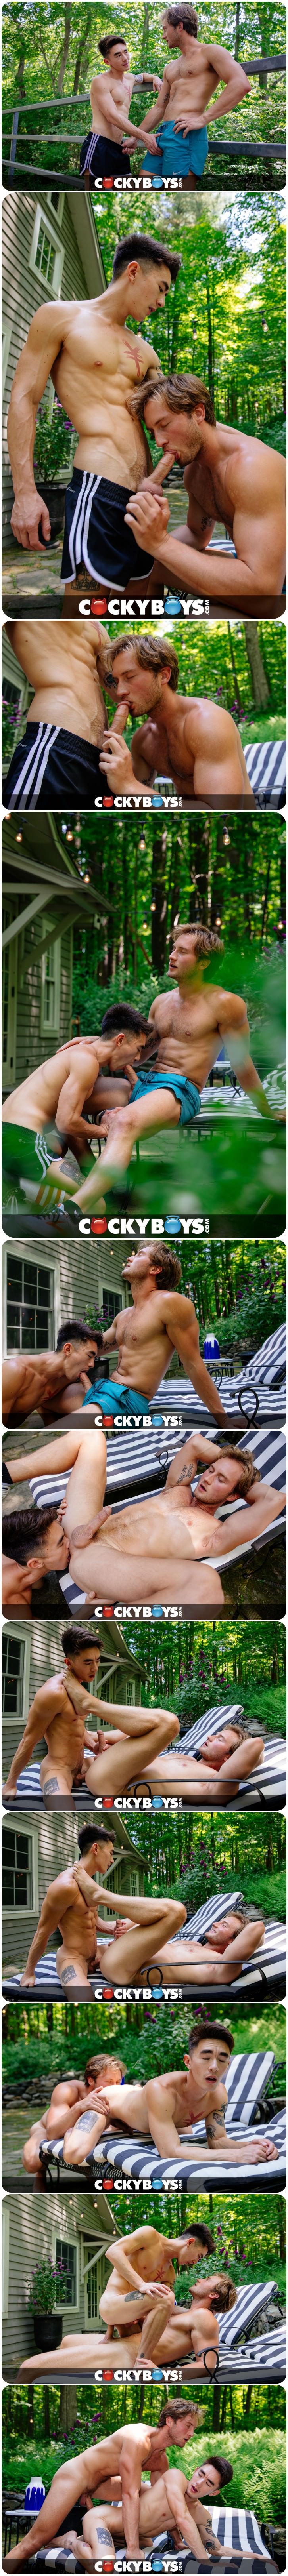 CockyBoys, Cody Seiya, Daniel Evans